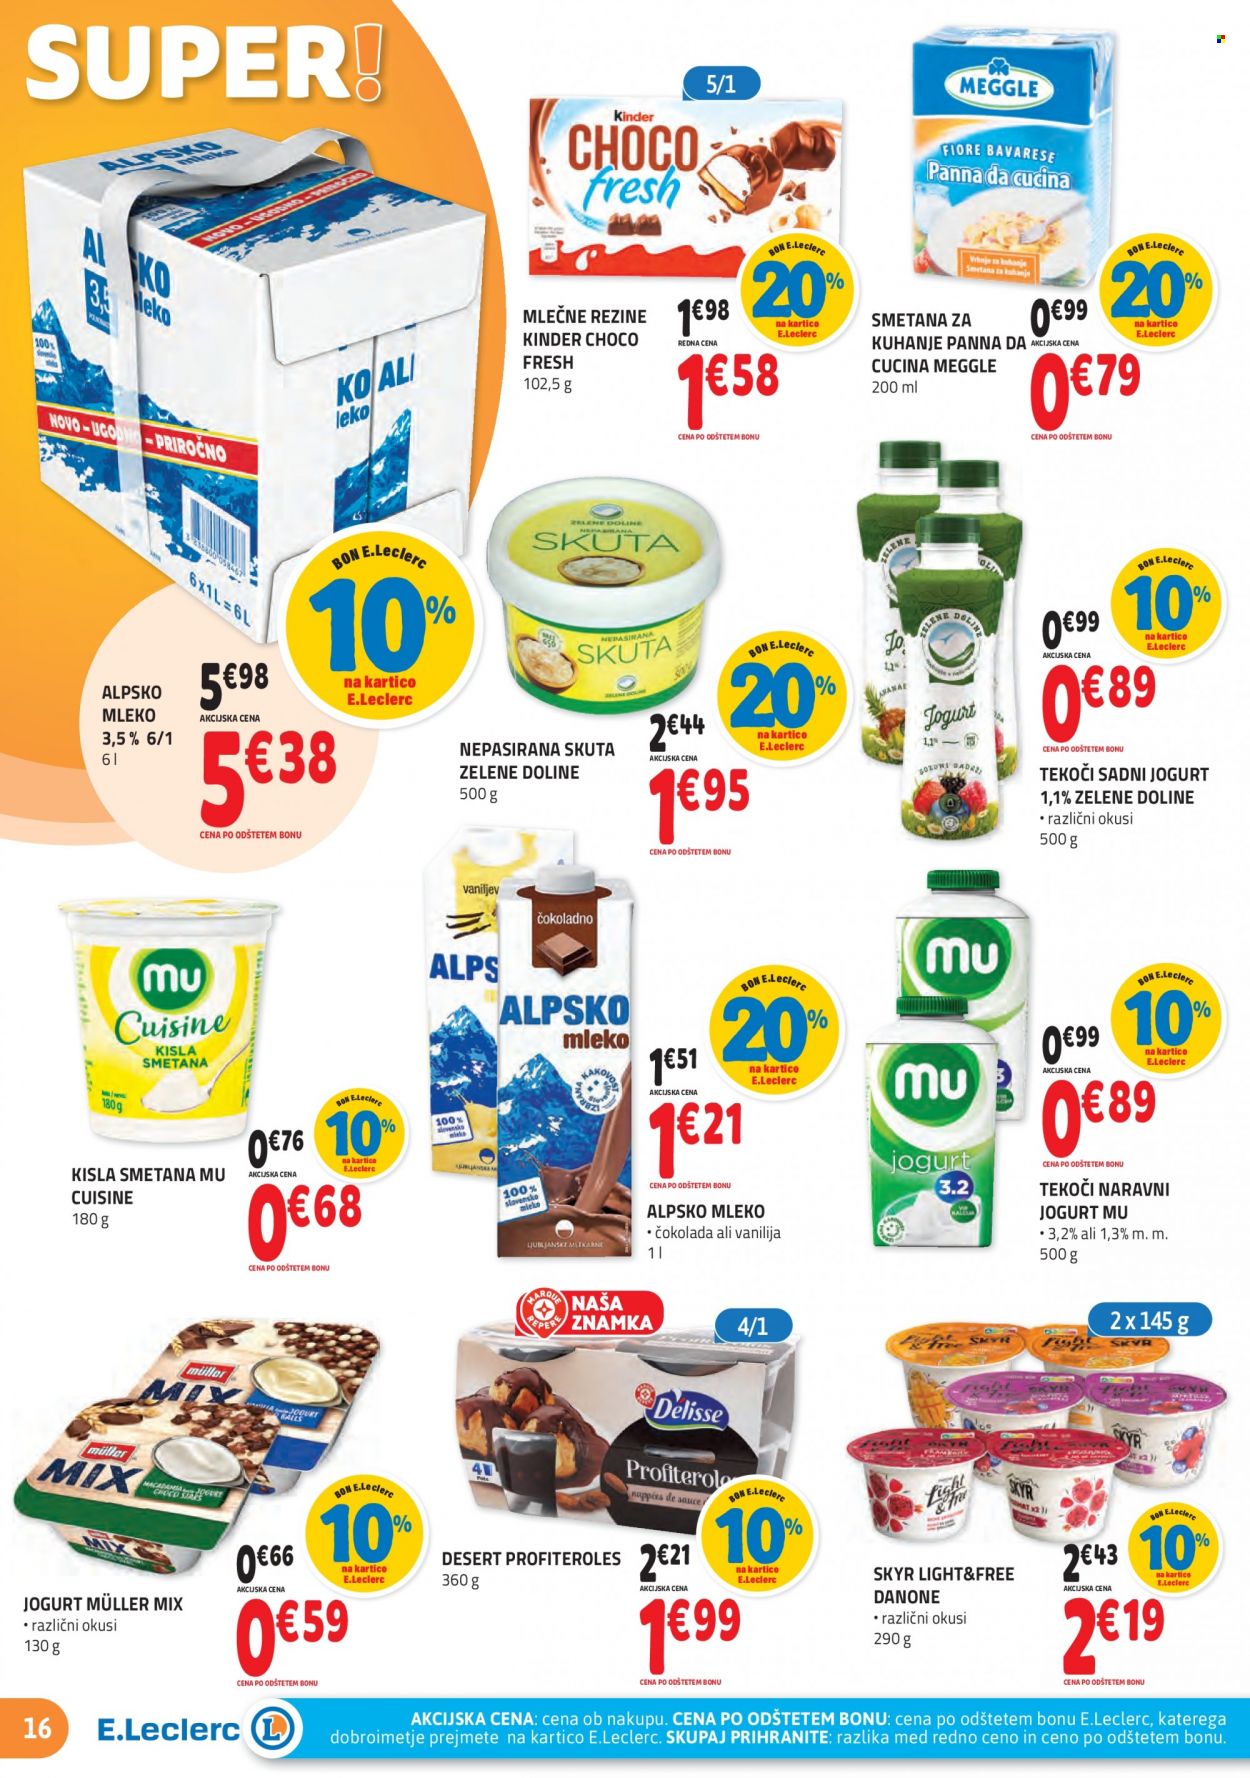 thumbnail - E.Leclerc katalog - 6.10.2021 - 16.10.2021 - Ponudba izdelkov - Meggle, skuta, jogurt, Müller, sadni jogurt, Skyr, Alpsko mleko, mleko, kisla smetana, smetana za kuhanje, čokolada. Stran 16.